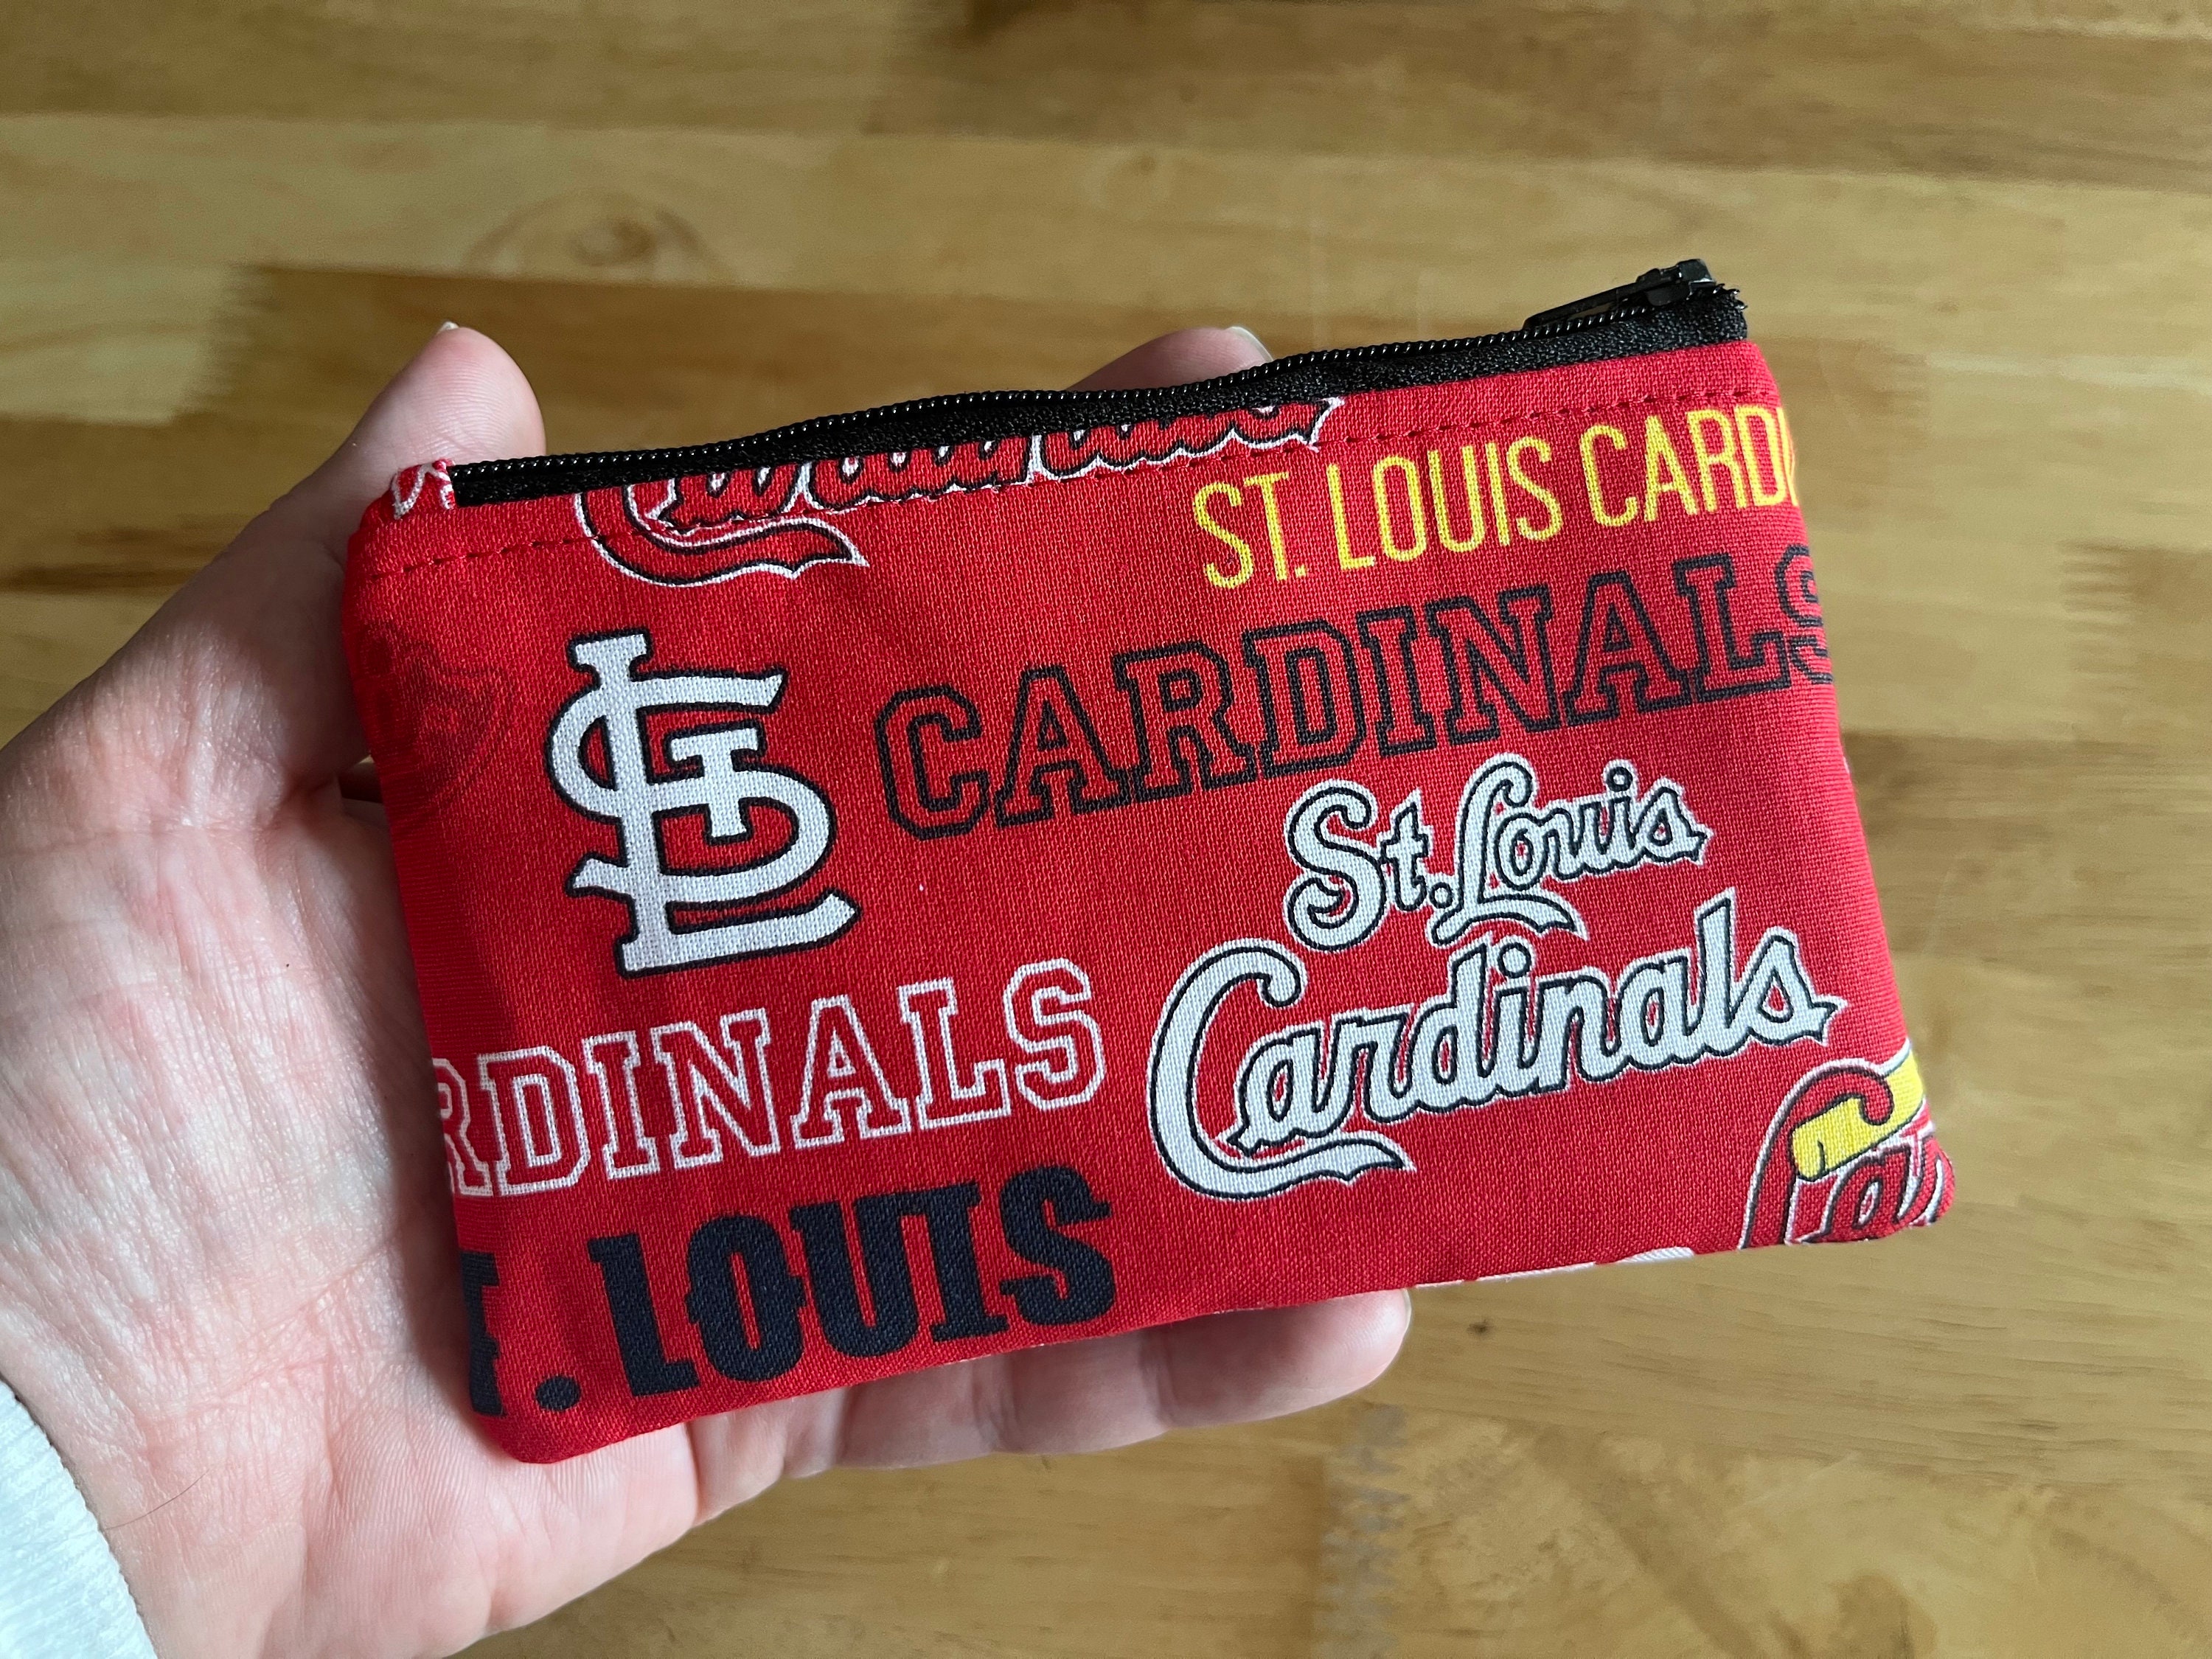 St. Louis Cardinals sga belt bag